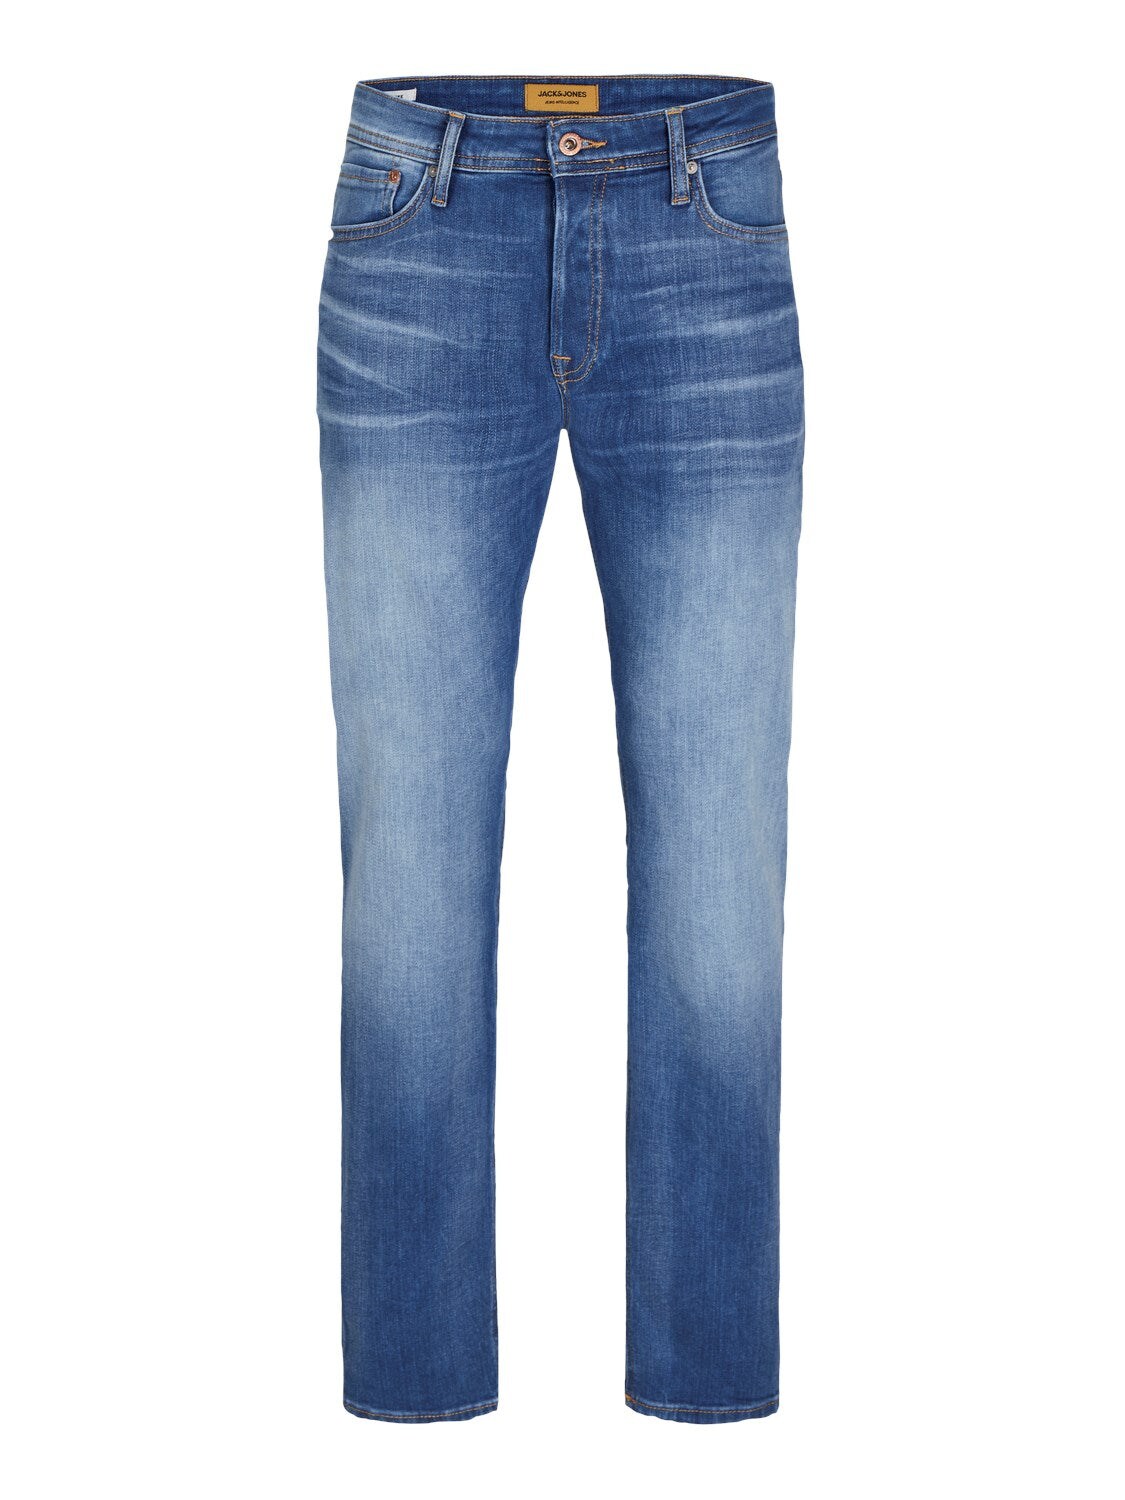 JACK & JONES Tapered Fit Jeans 'JJIMIKE JJORIGINAL JOS 411 NOOS' Blue Denim, Unifarben, Blau - Gr. 31 x 30